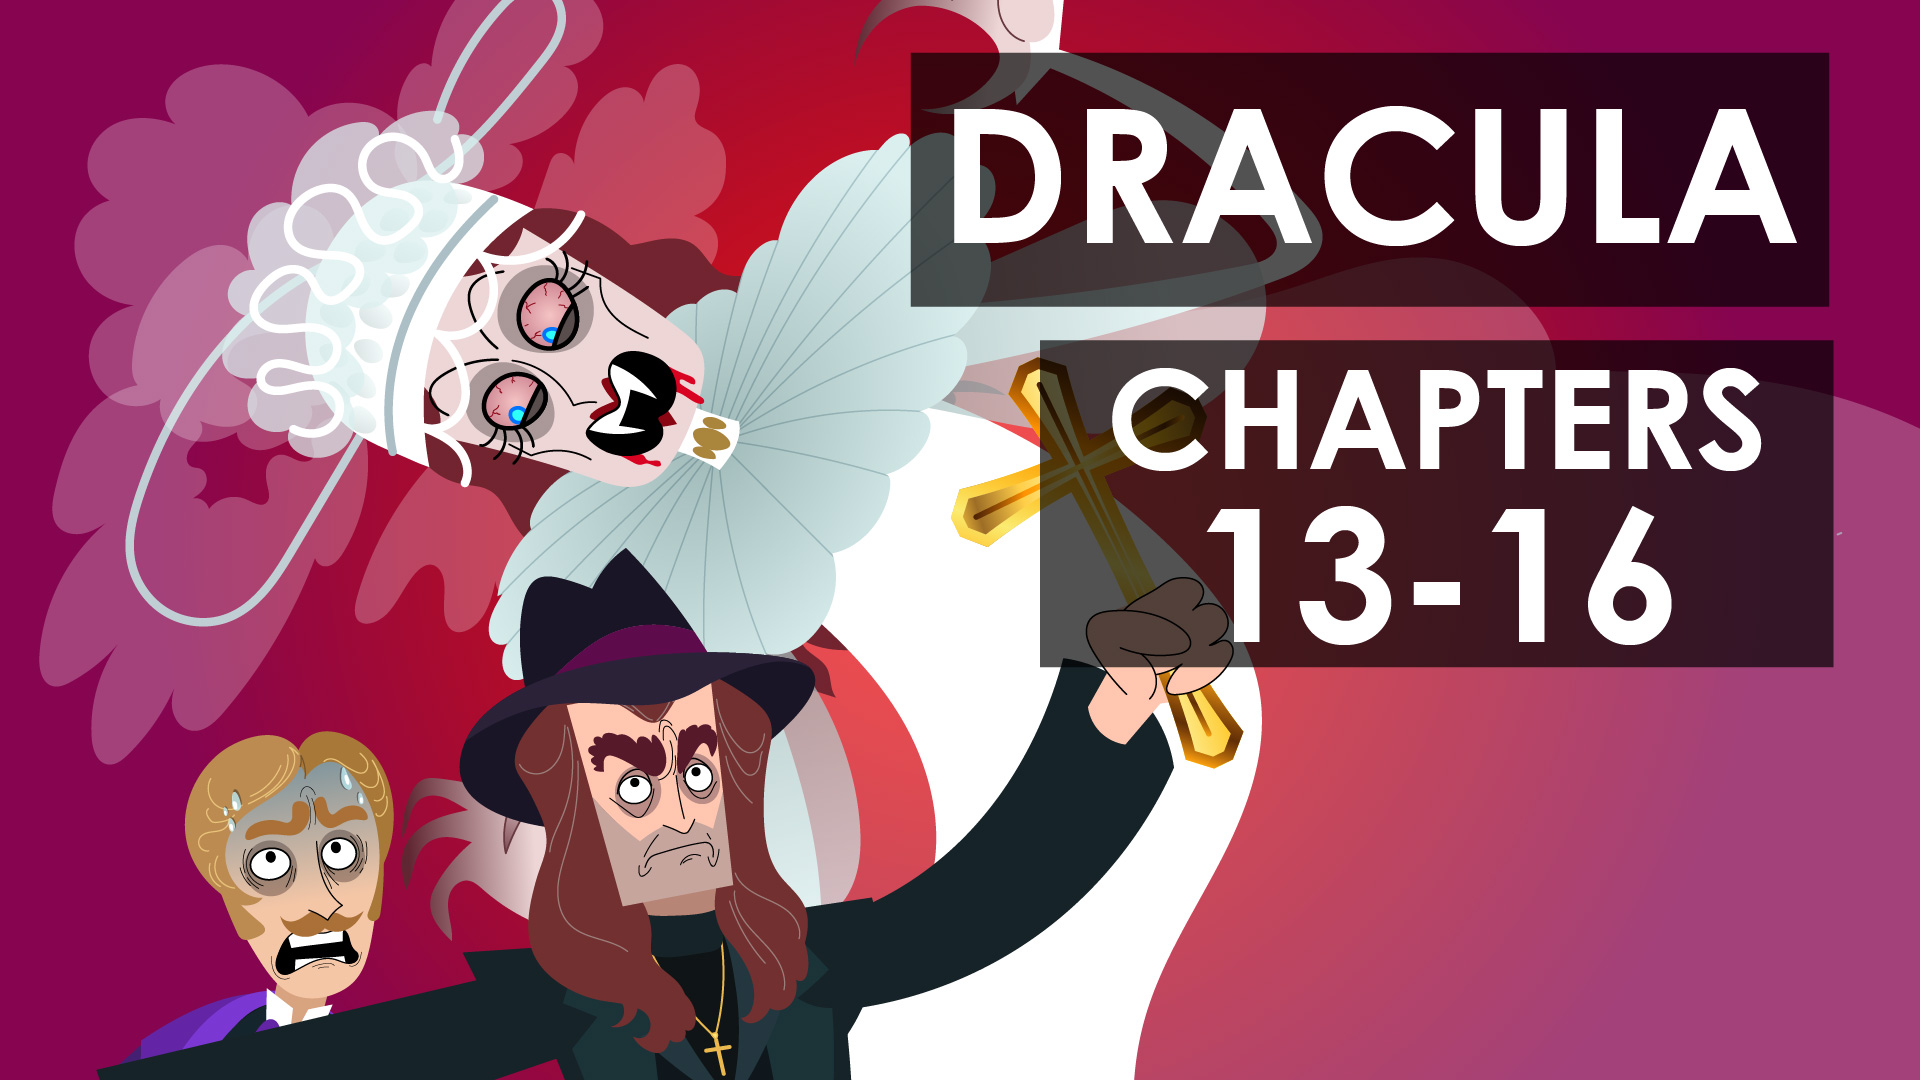 Dracula - Bram Stoker - Chapters 13-16 Summary - Powering Through Prose Series